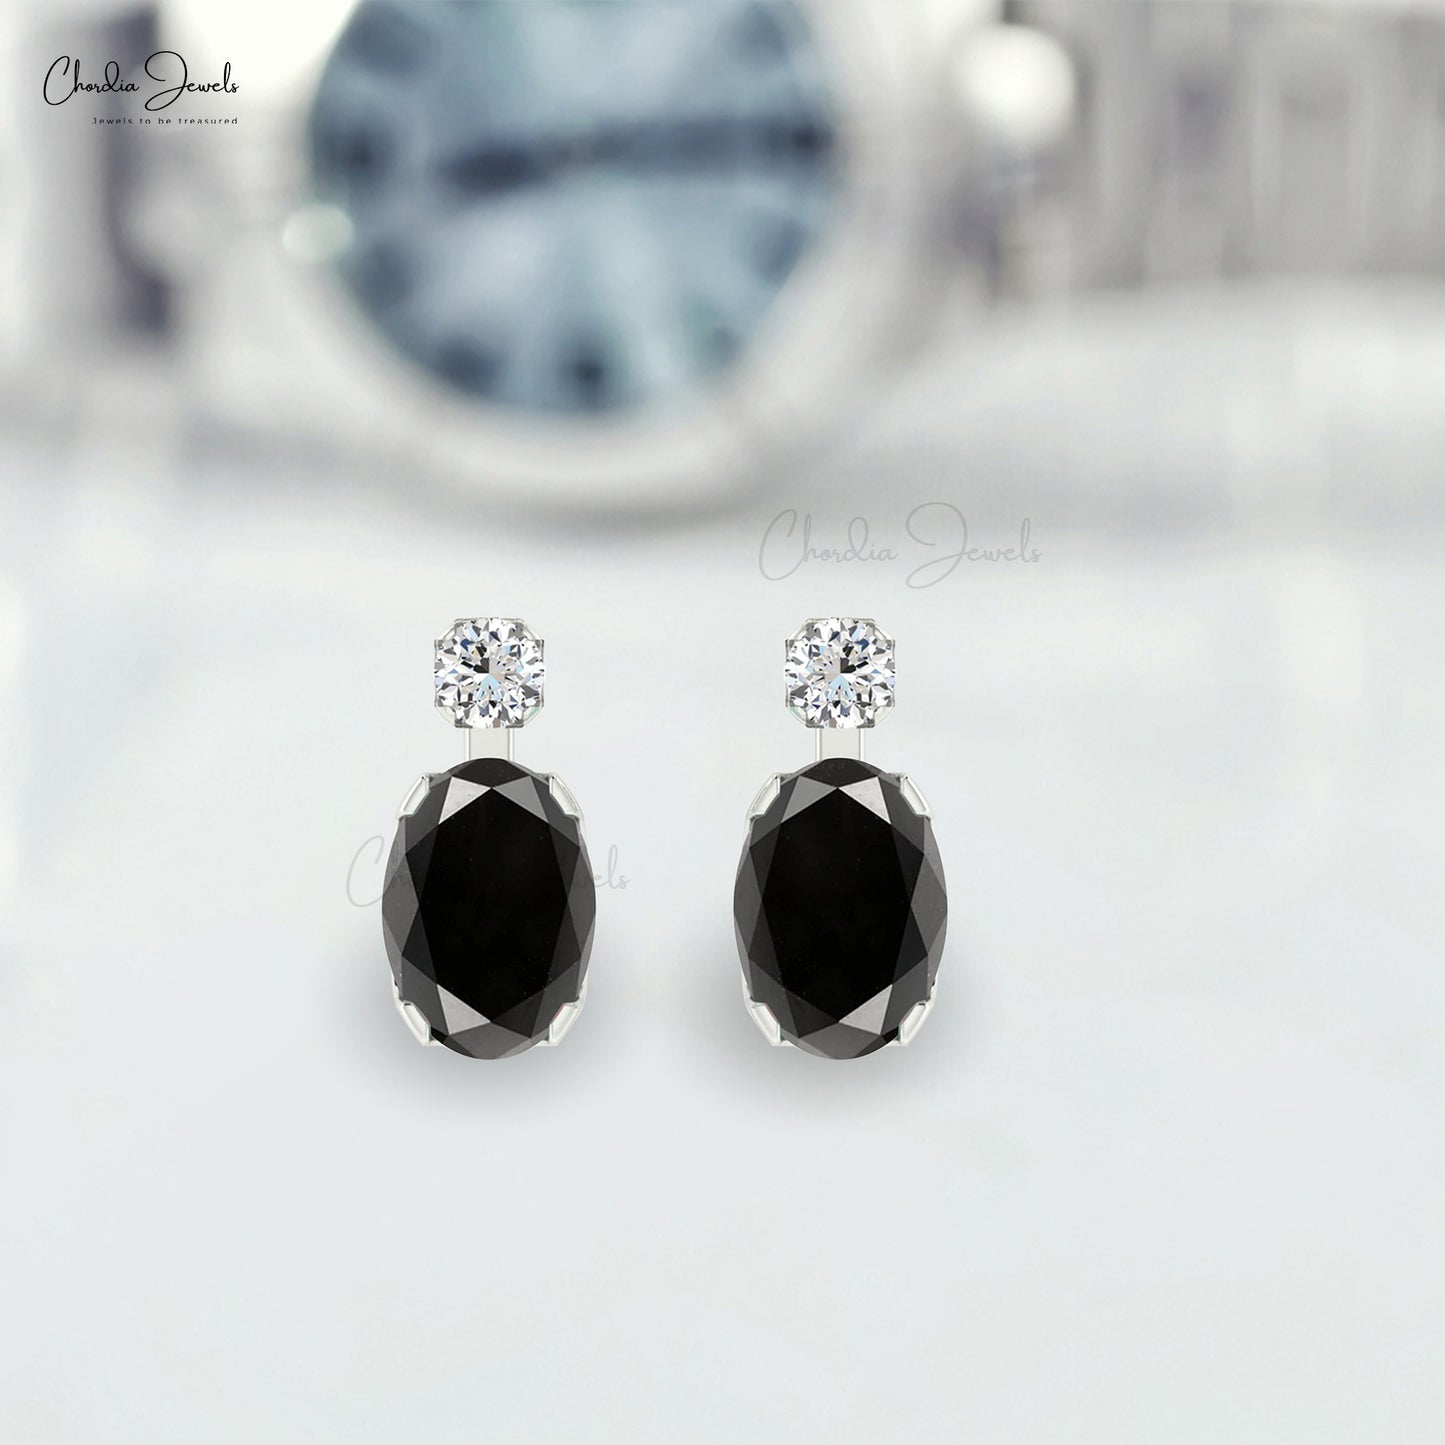 Genuine Black Diamond Wedding Earrings 14k Real Gold Fine Jewelry 0.94Ct Oval Gemstone Minimal Earrings For Valentine's Day